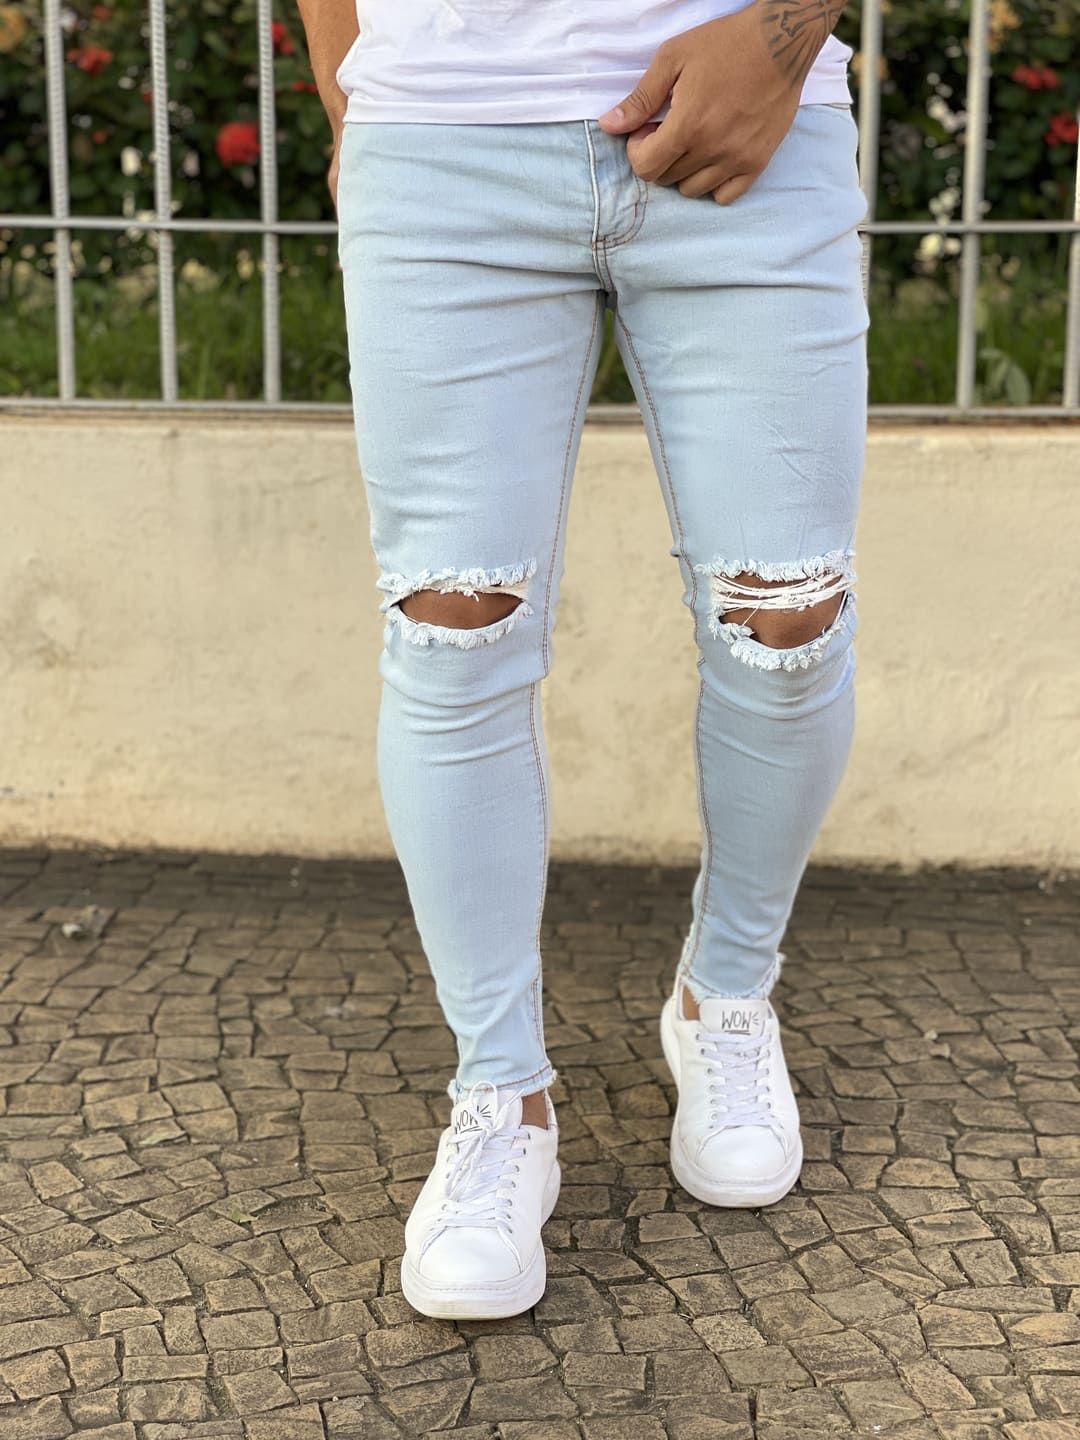 Bermuda Jeans Masculina Destroyed Altura Do Joelho % - Imperium Store